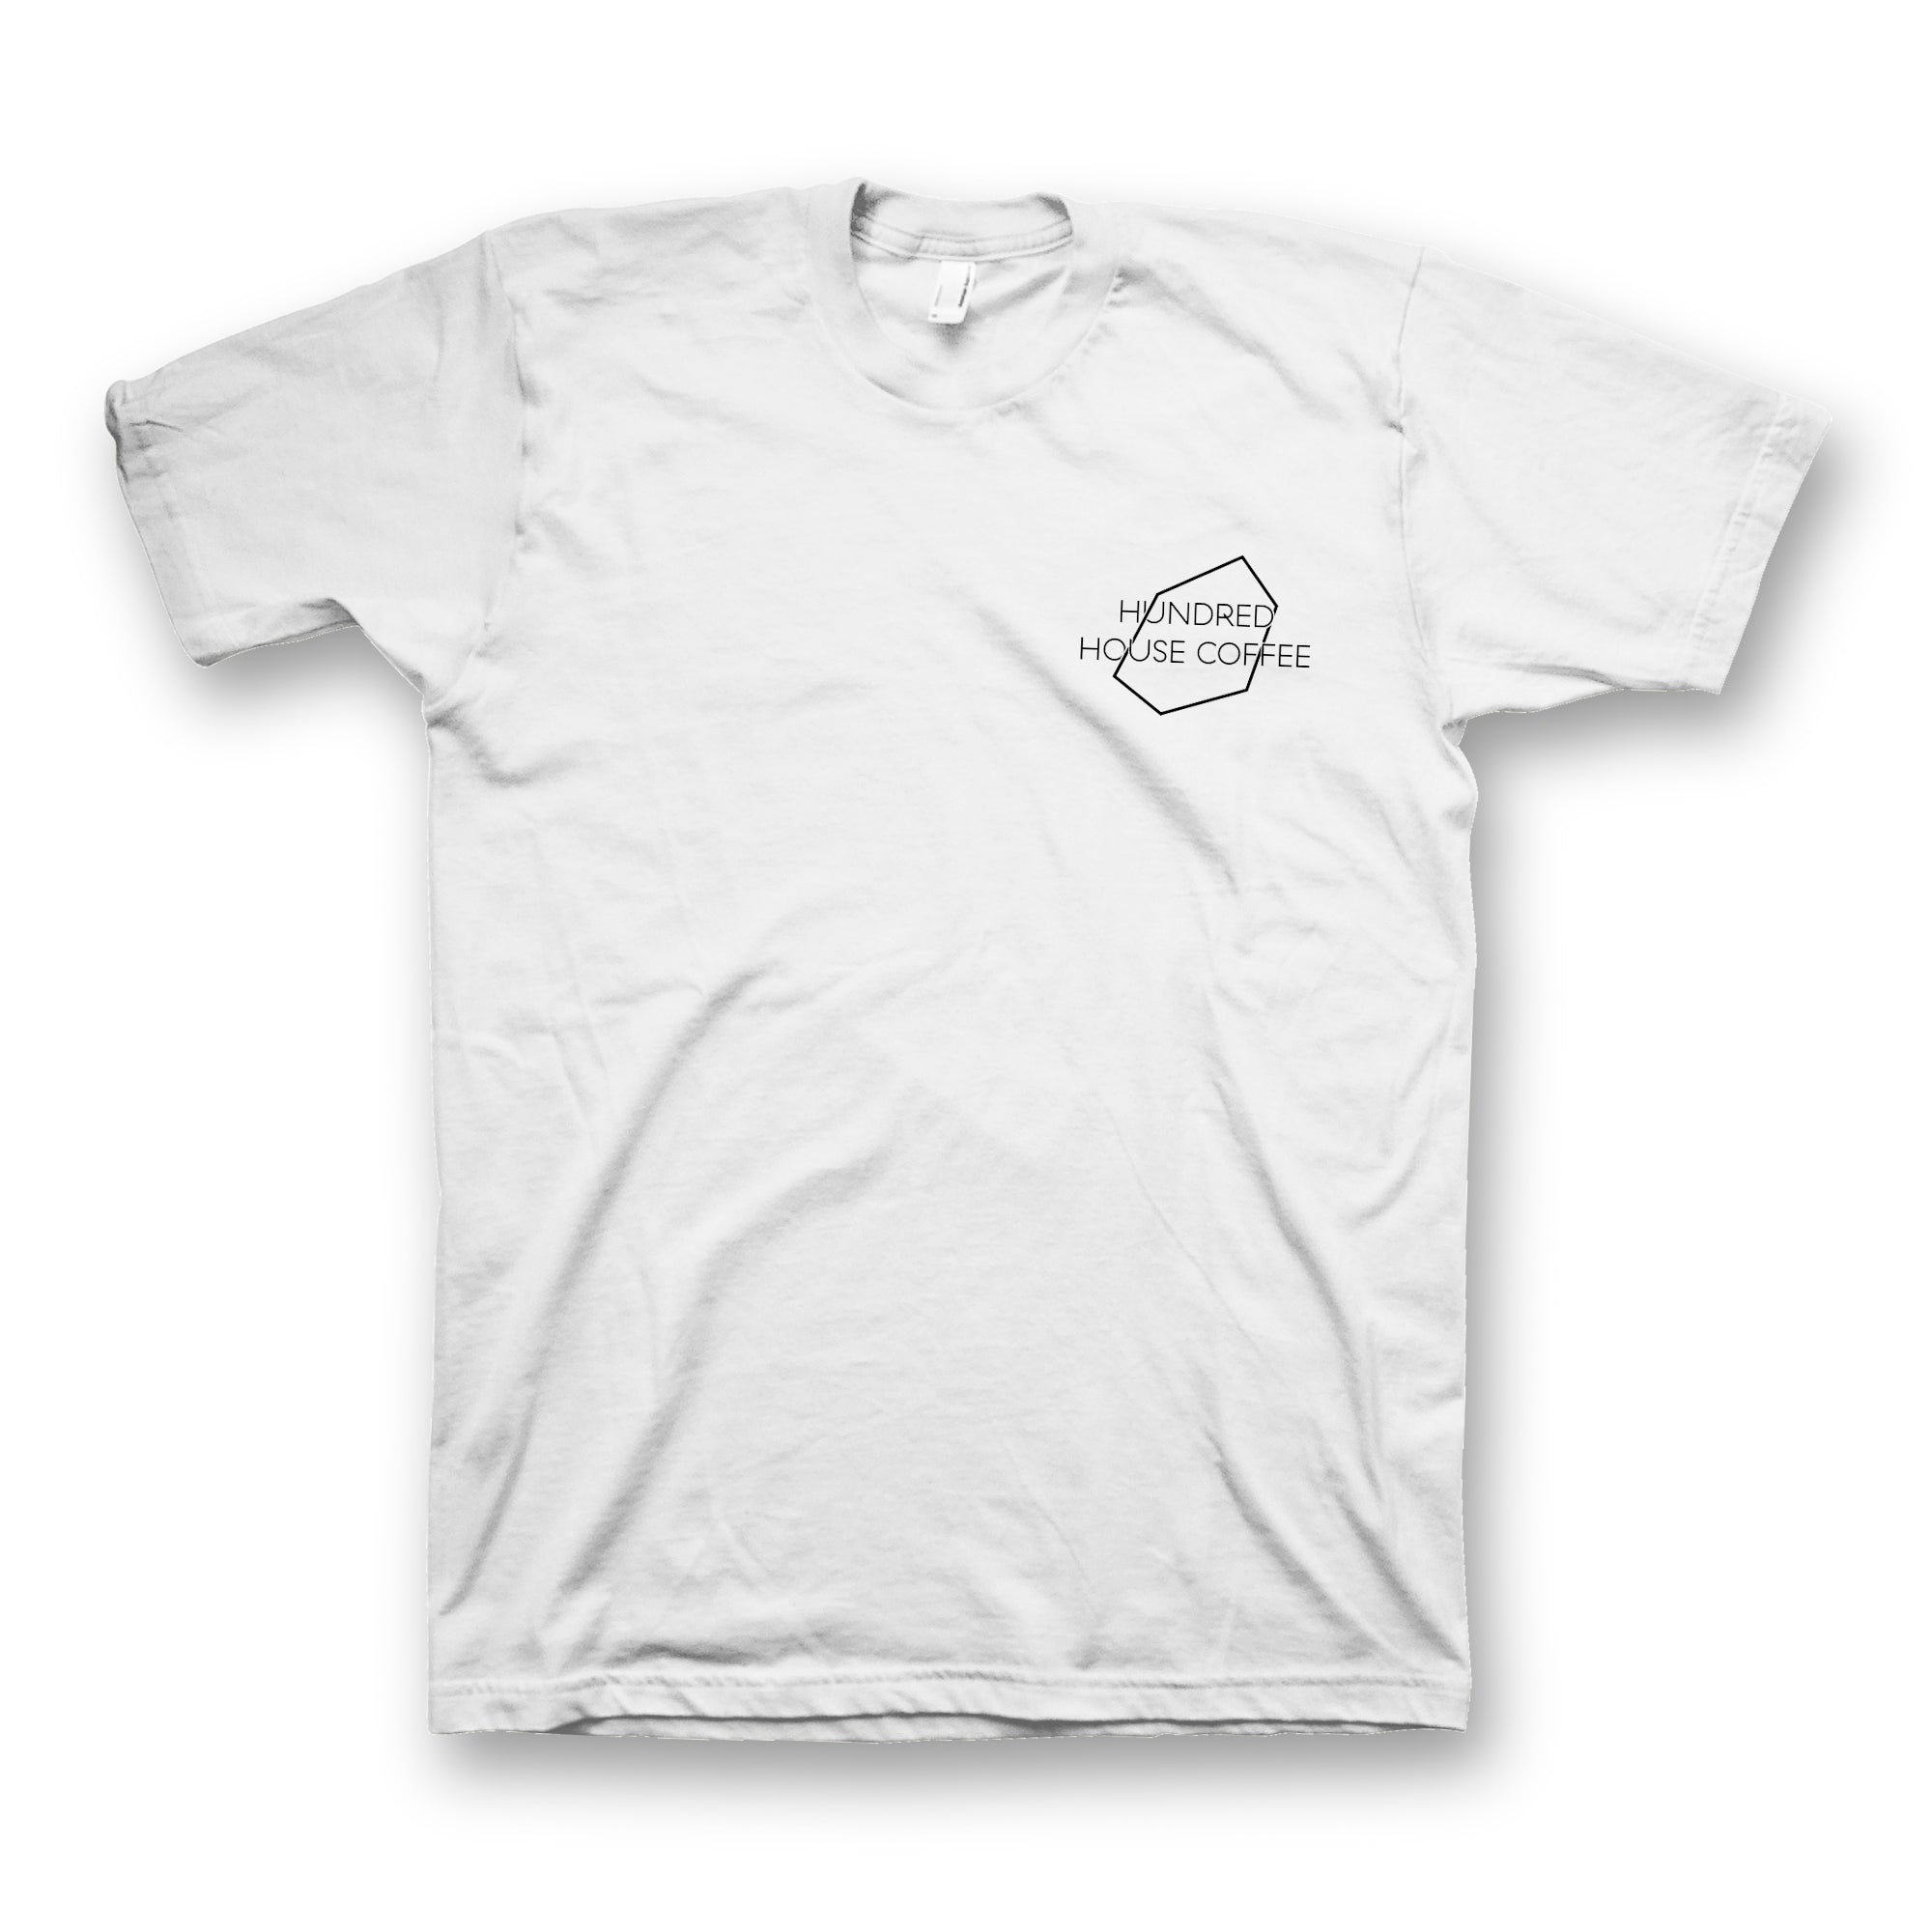 Creative Fuel T-Shirt | Black or White